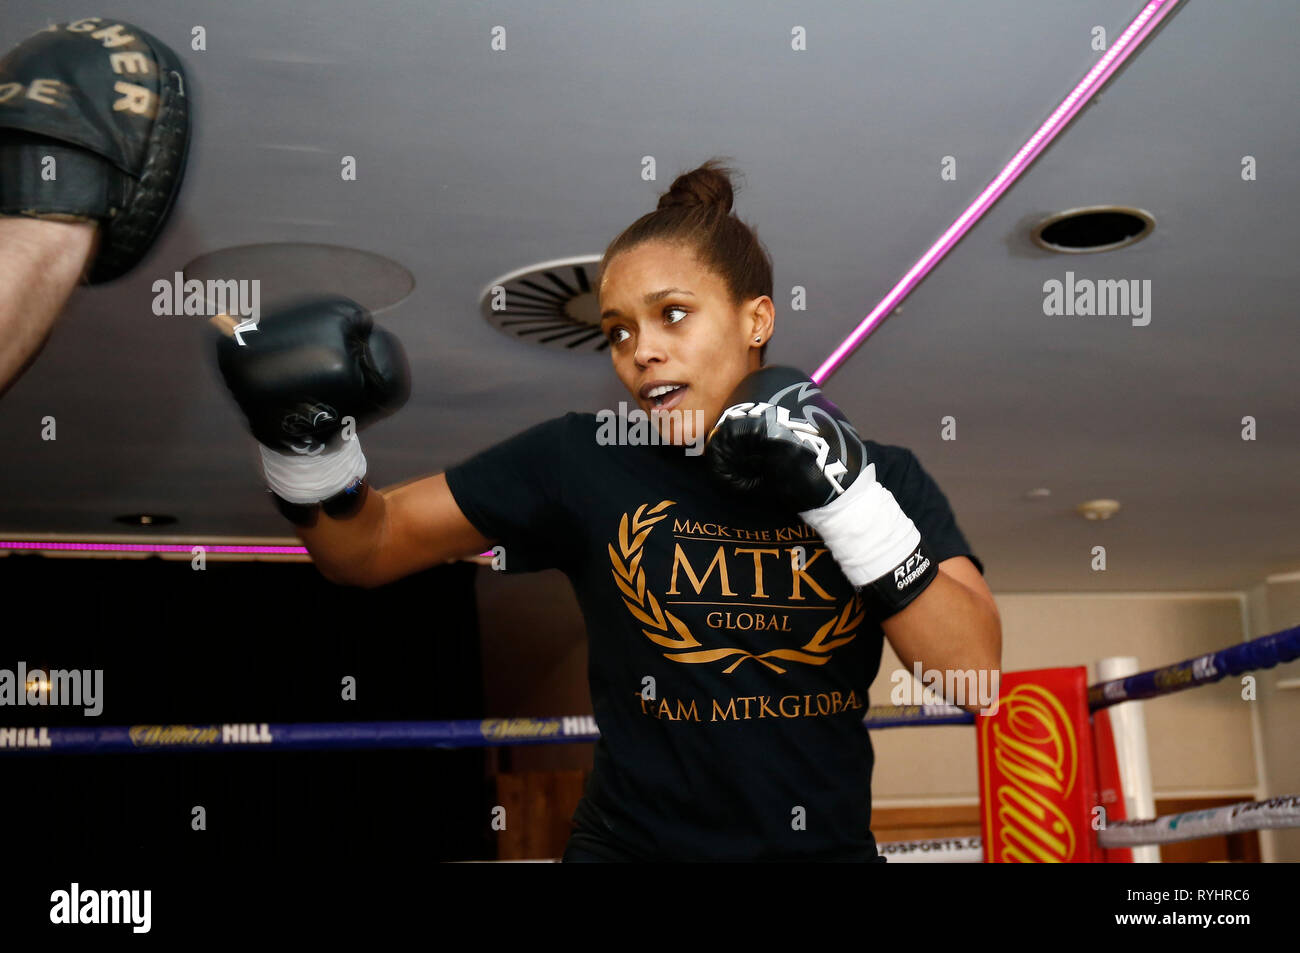 Natasha jones boxing hi-res stock photography and images - Alamy